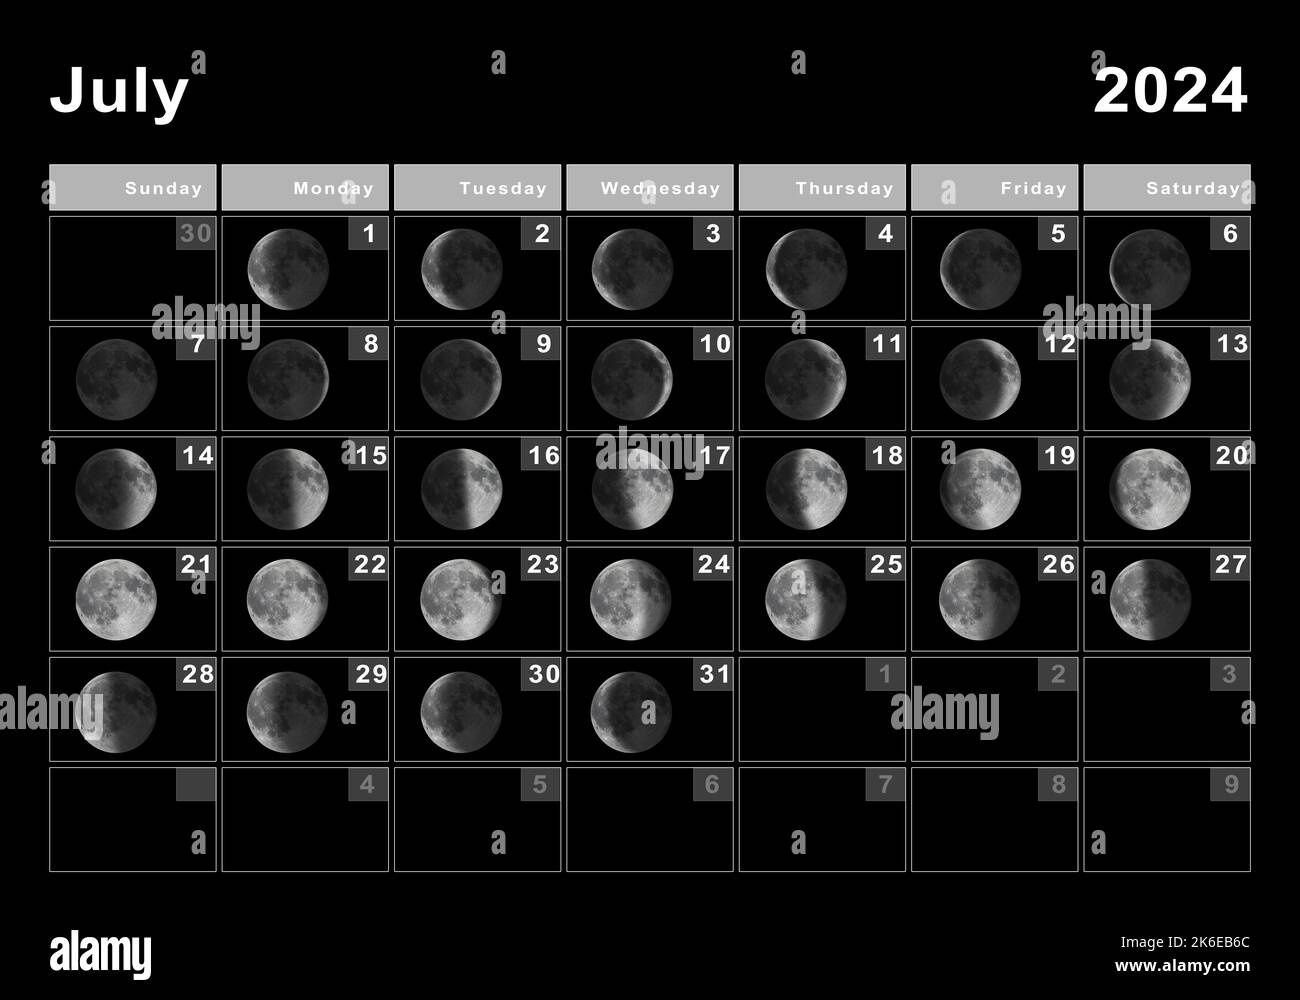 July 2024 Lunar Calendar, Moon Cycles, Moon Phases Stock Photo - Alamy within Moon Phases Calendar July 2024